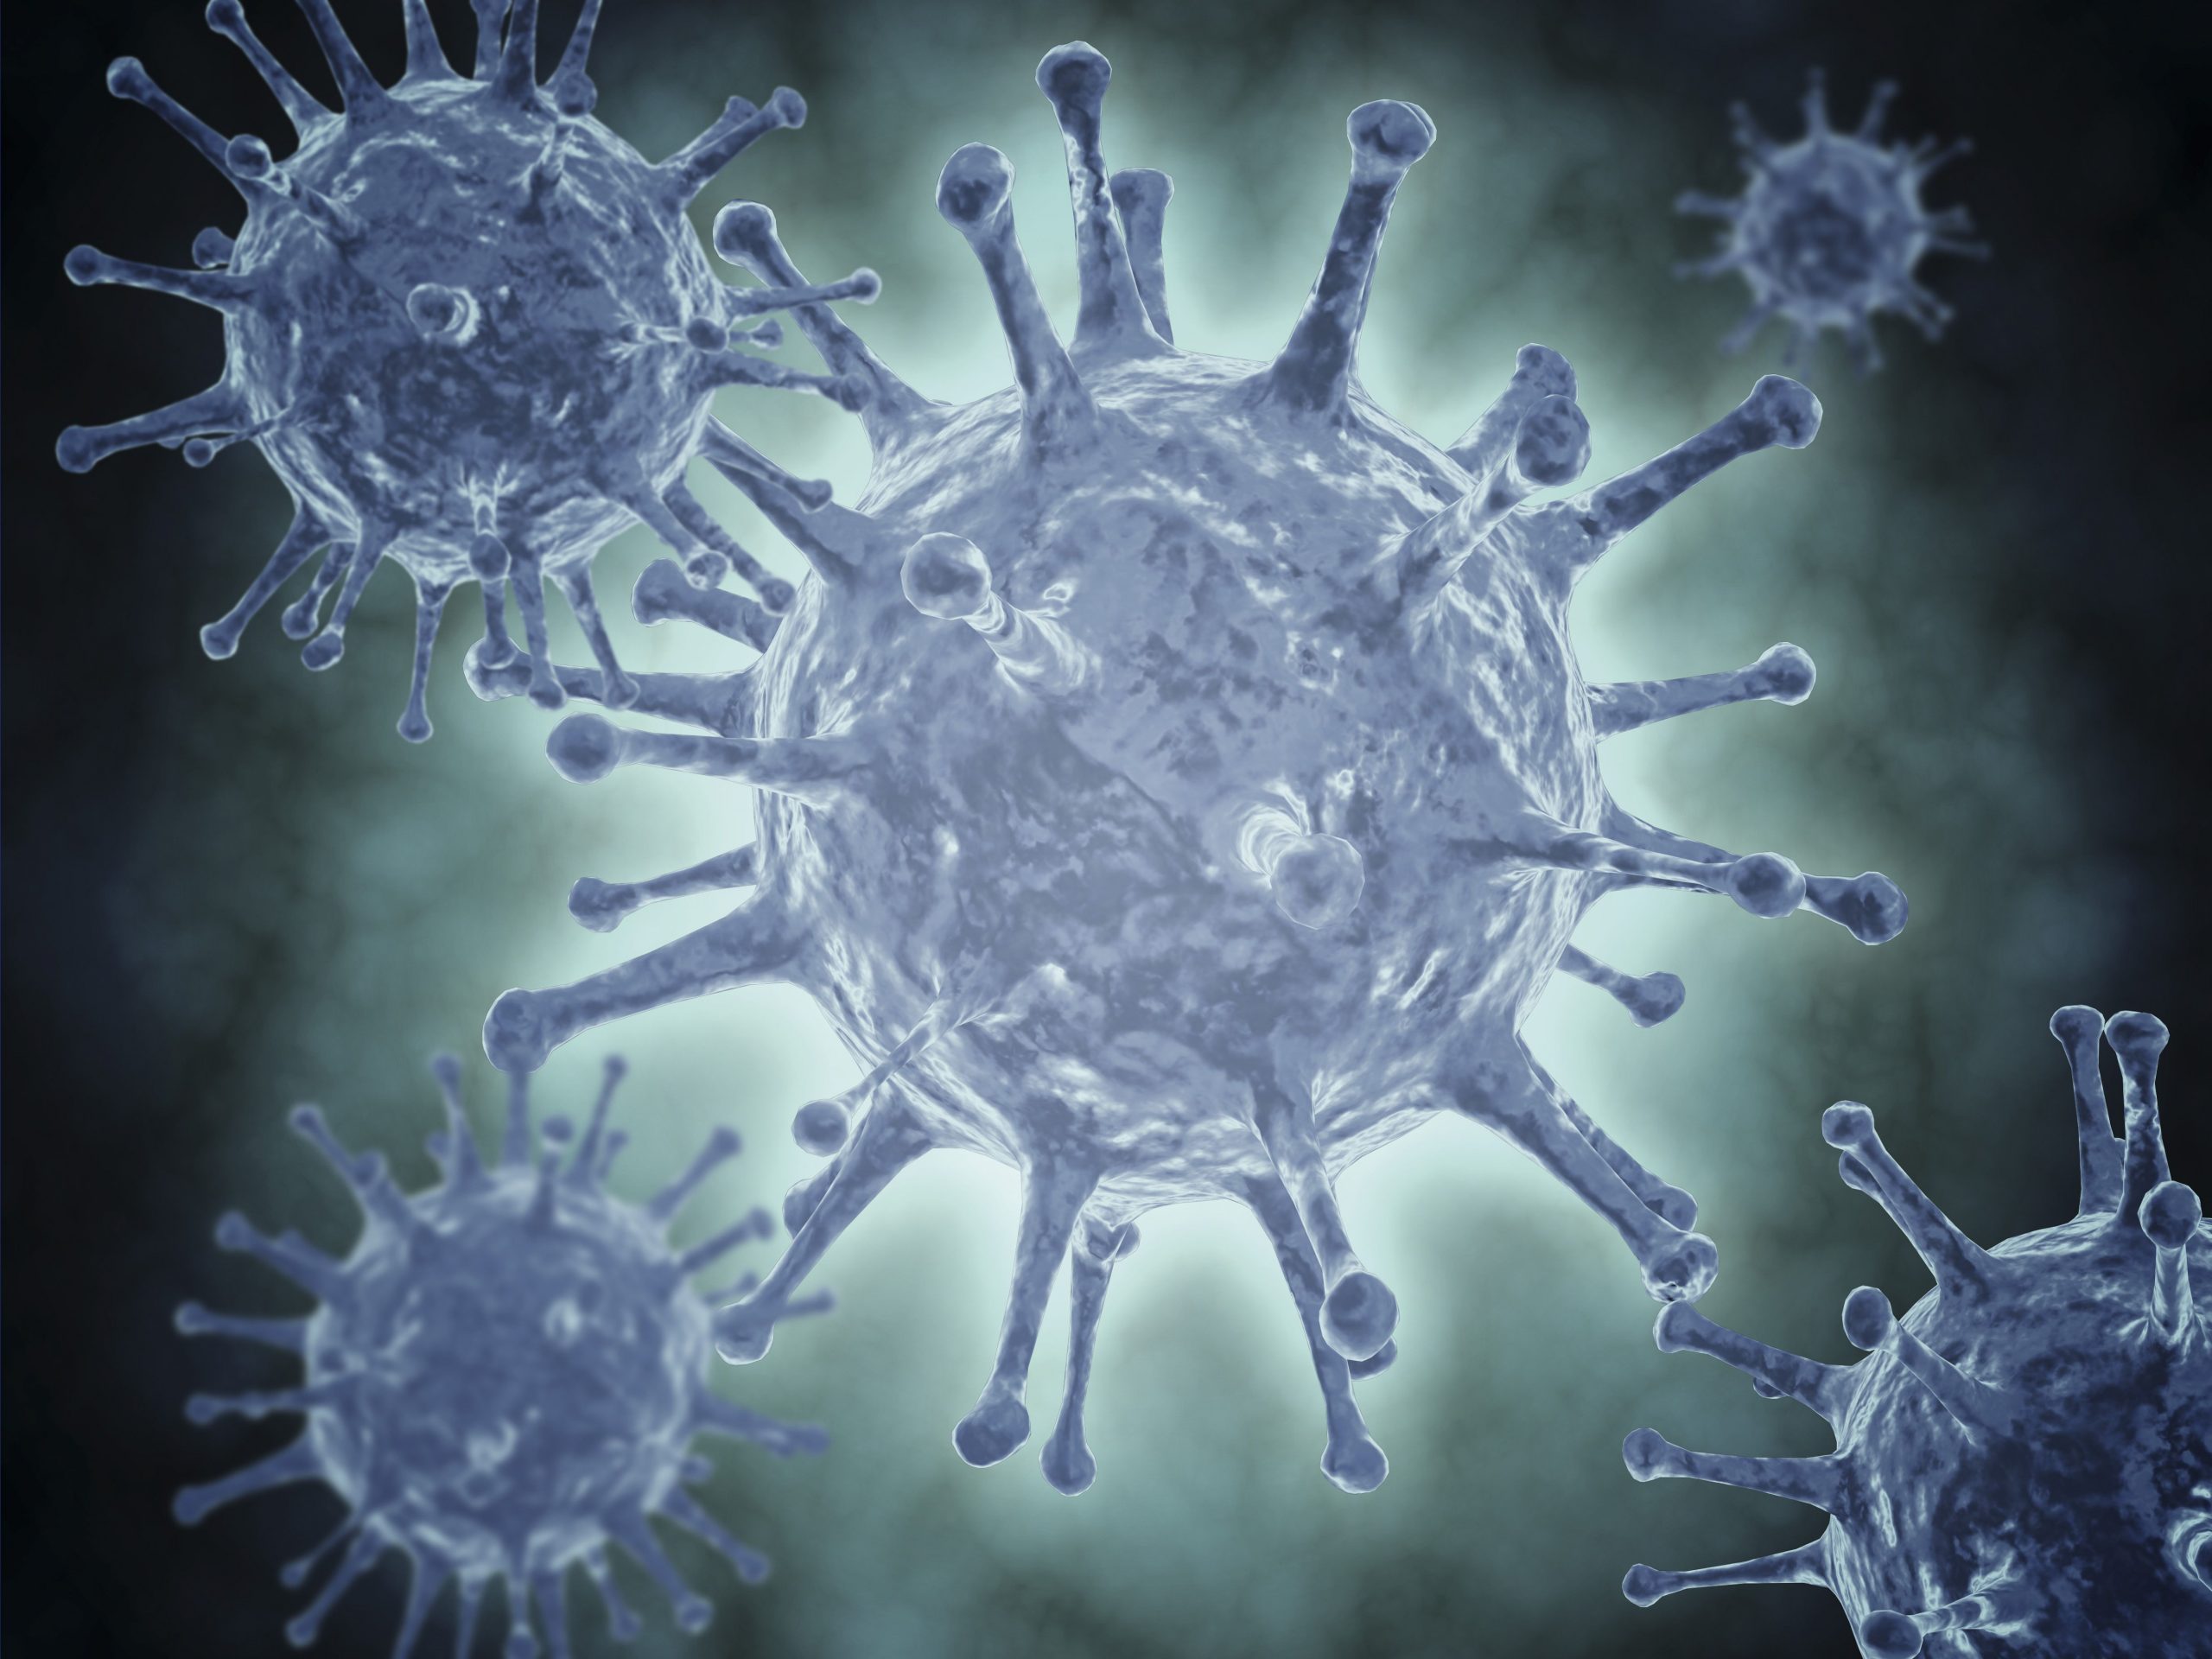 Hepatitis C Virus: Causes and Risk Factors